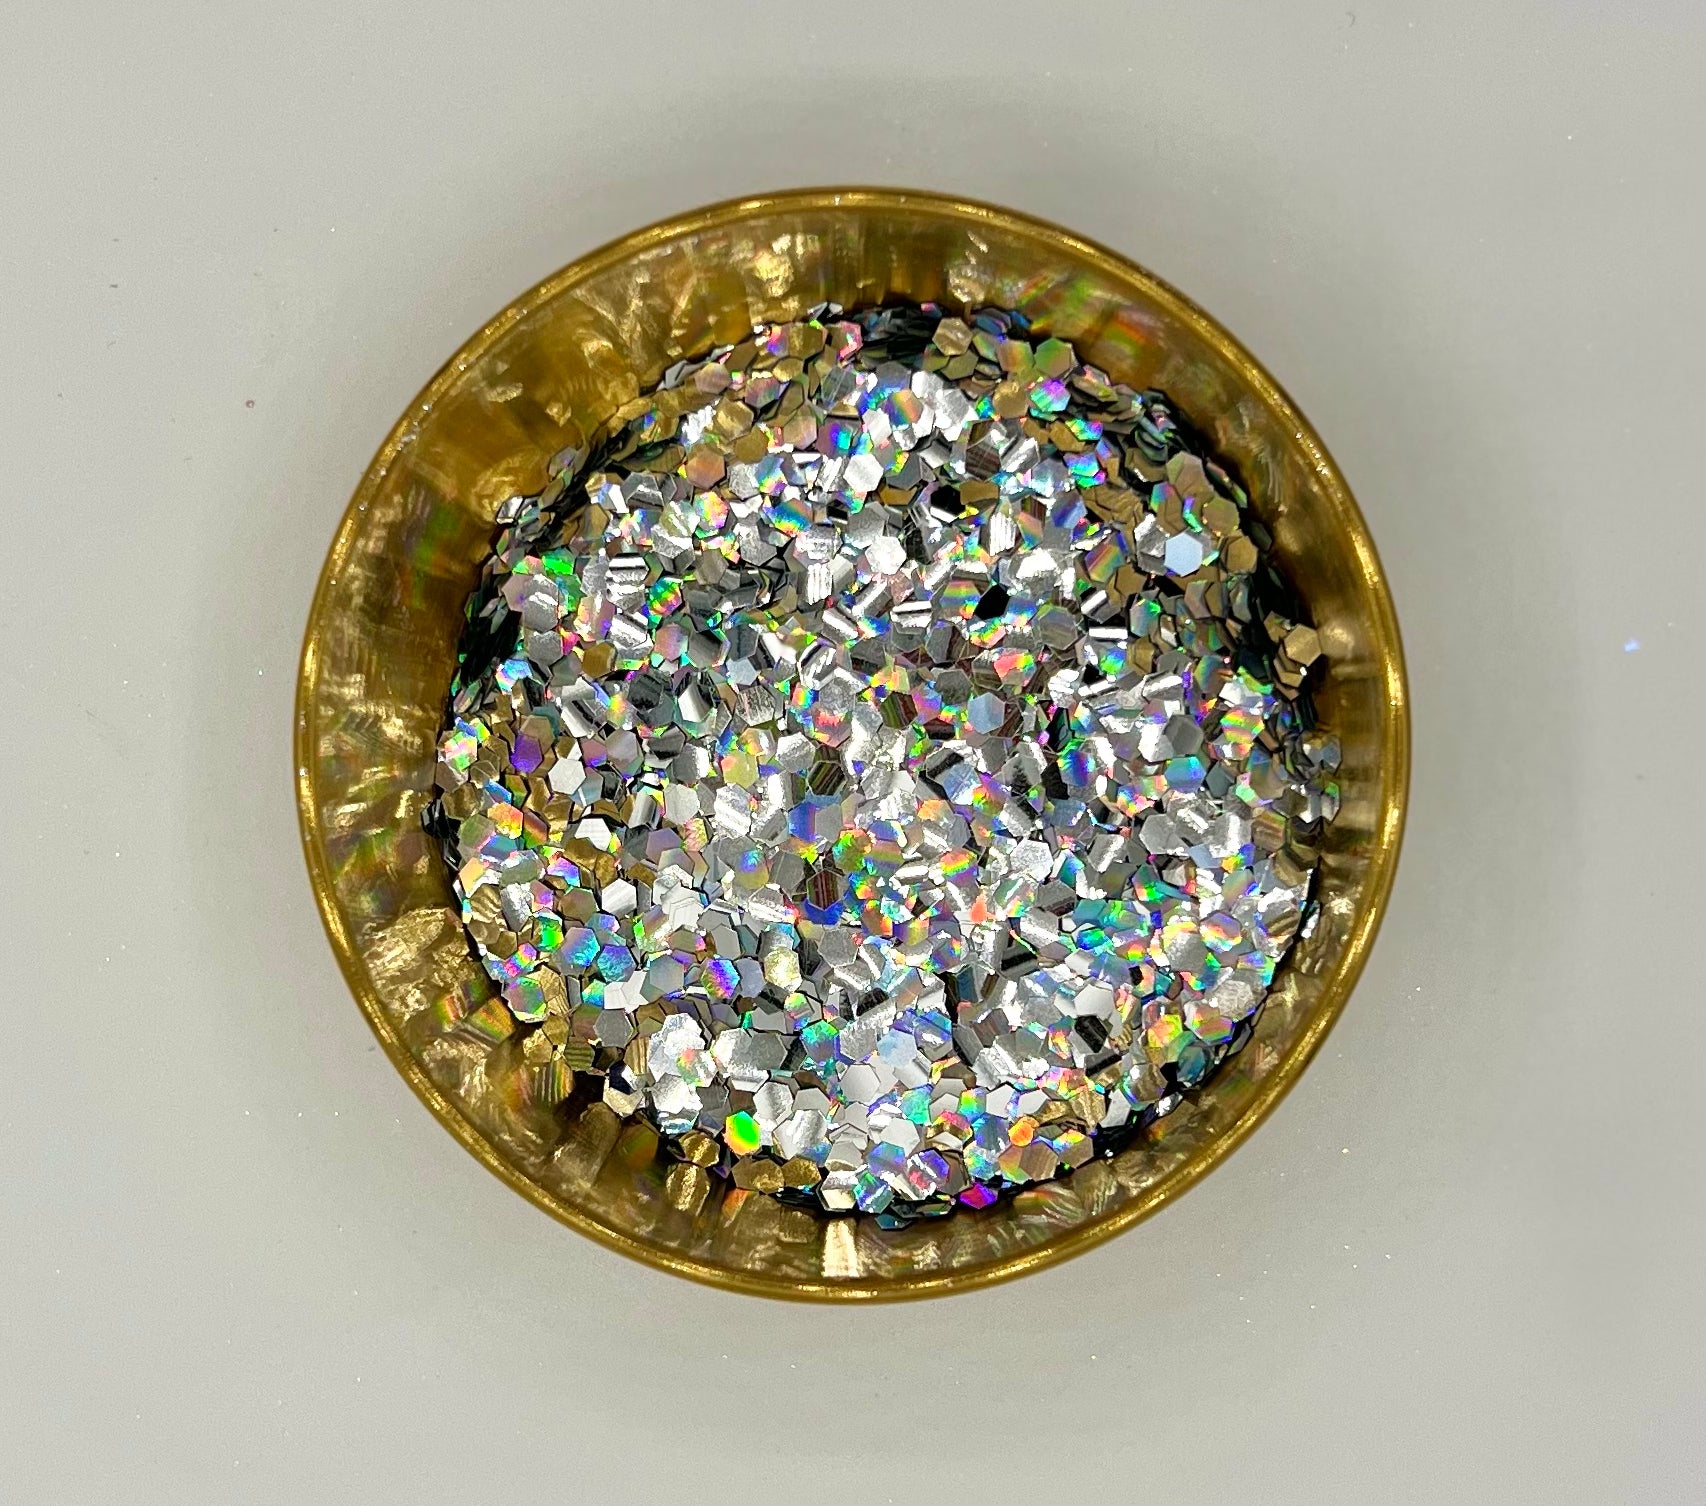 Neutron Dance Super Chunky Holographic Silver Biodegradable Glitter